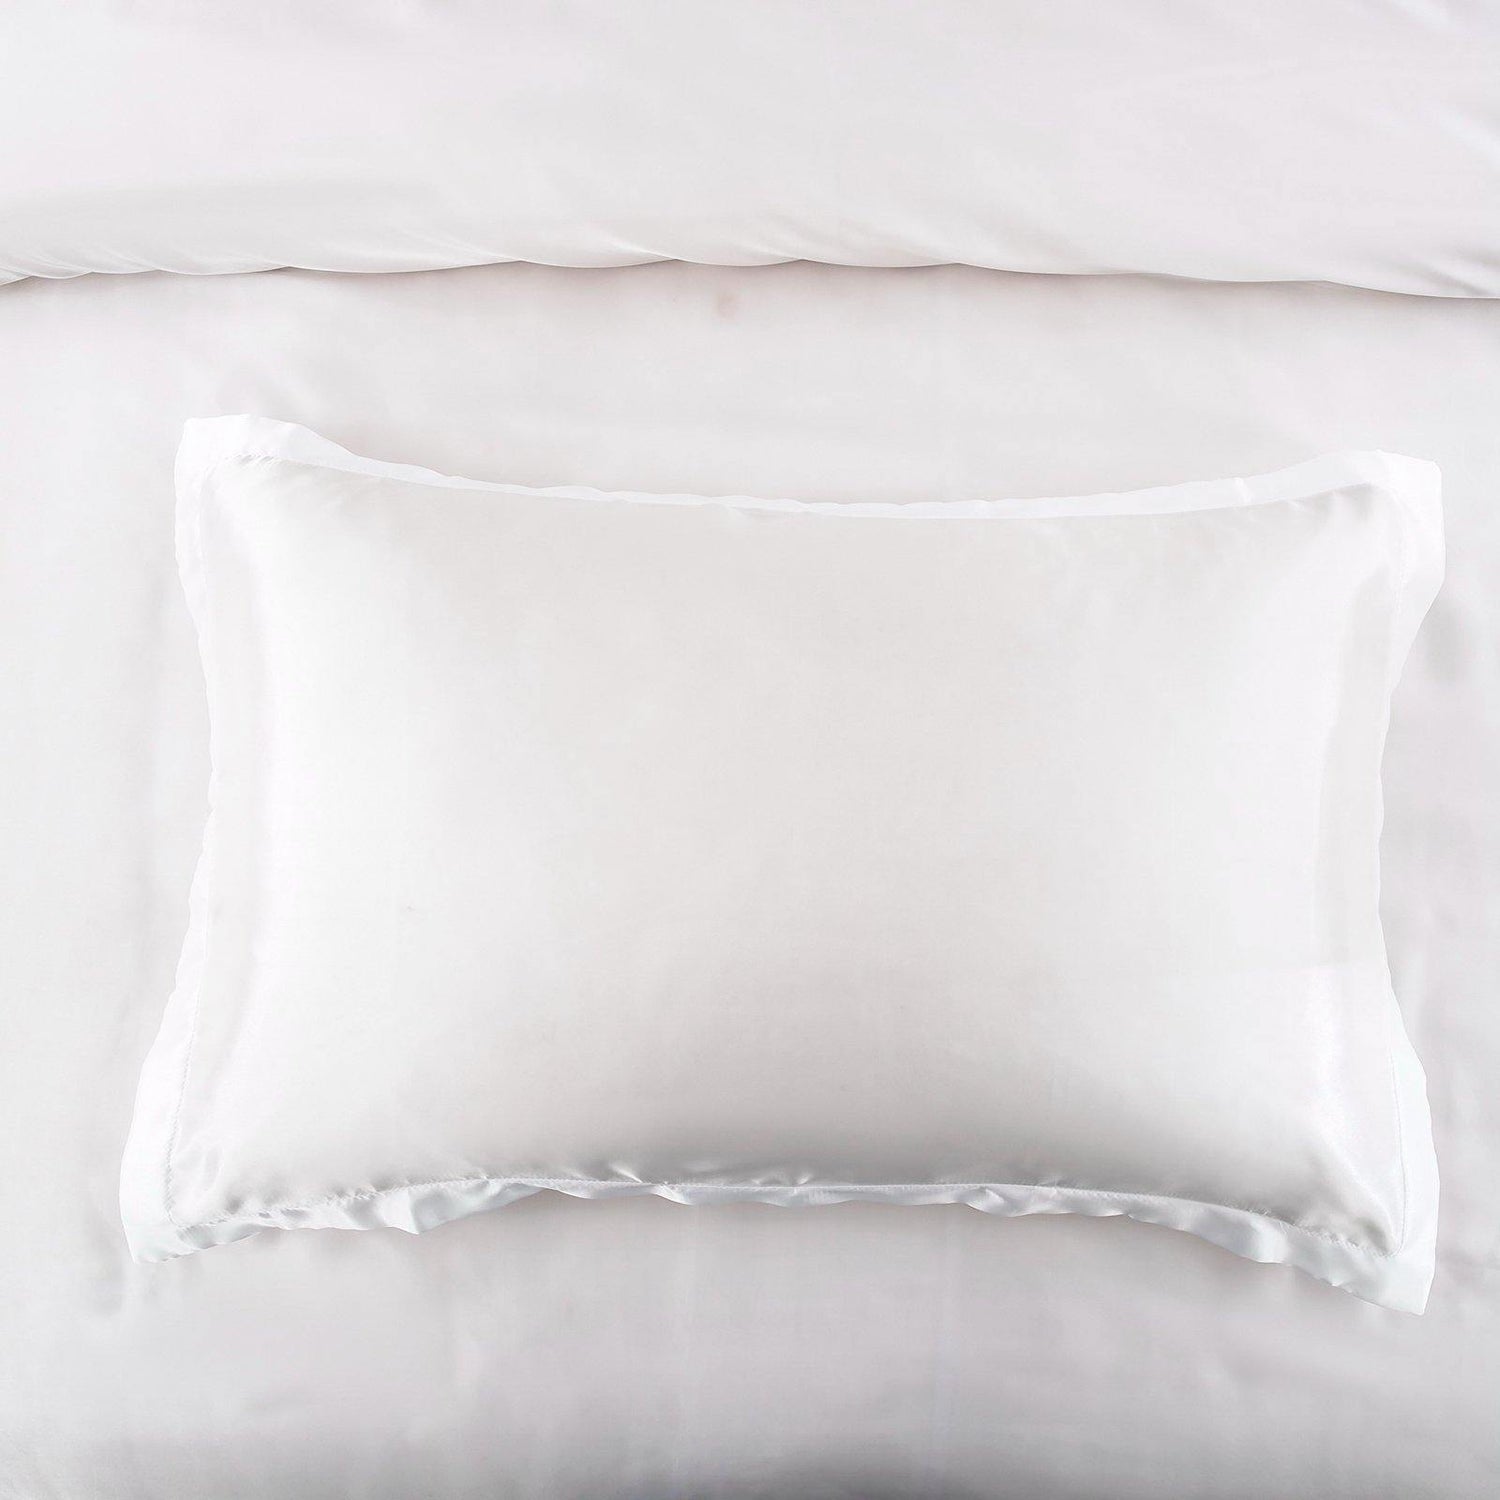 WONGS BEDDING Pure White Duvet Cover Pillowcase Set - Wongs bedding